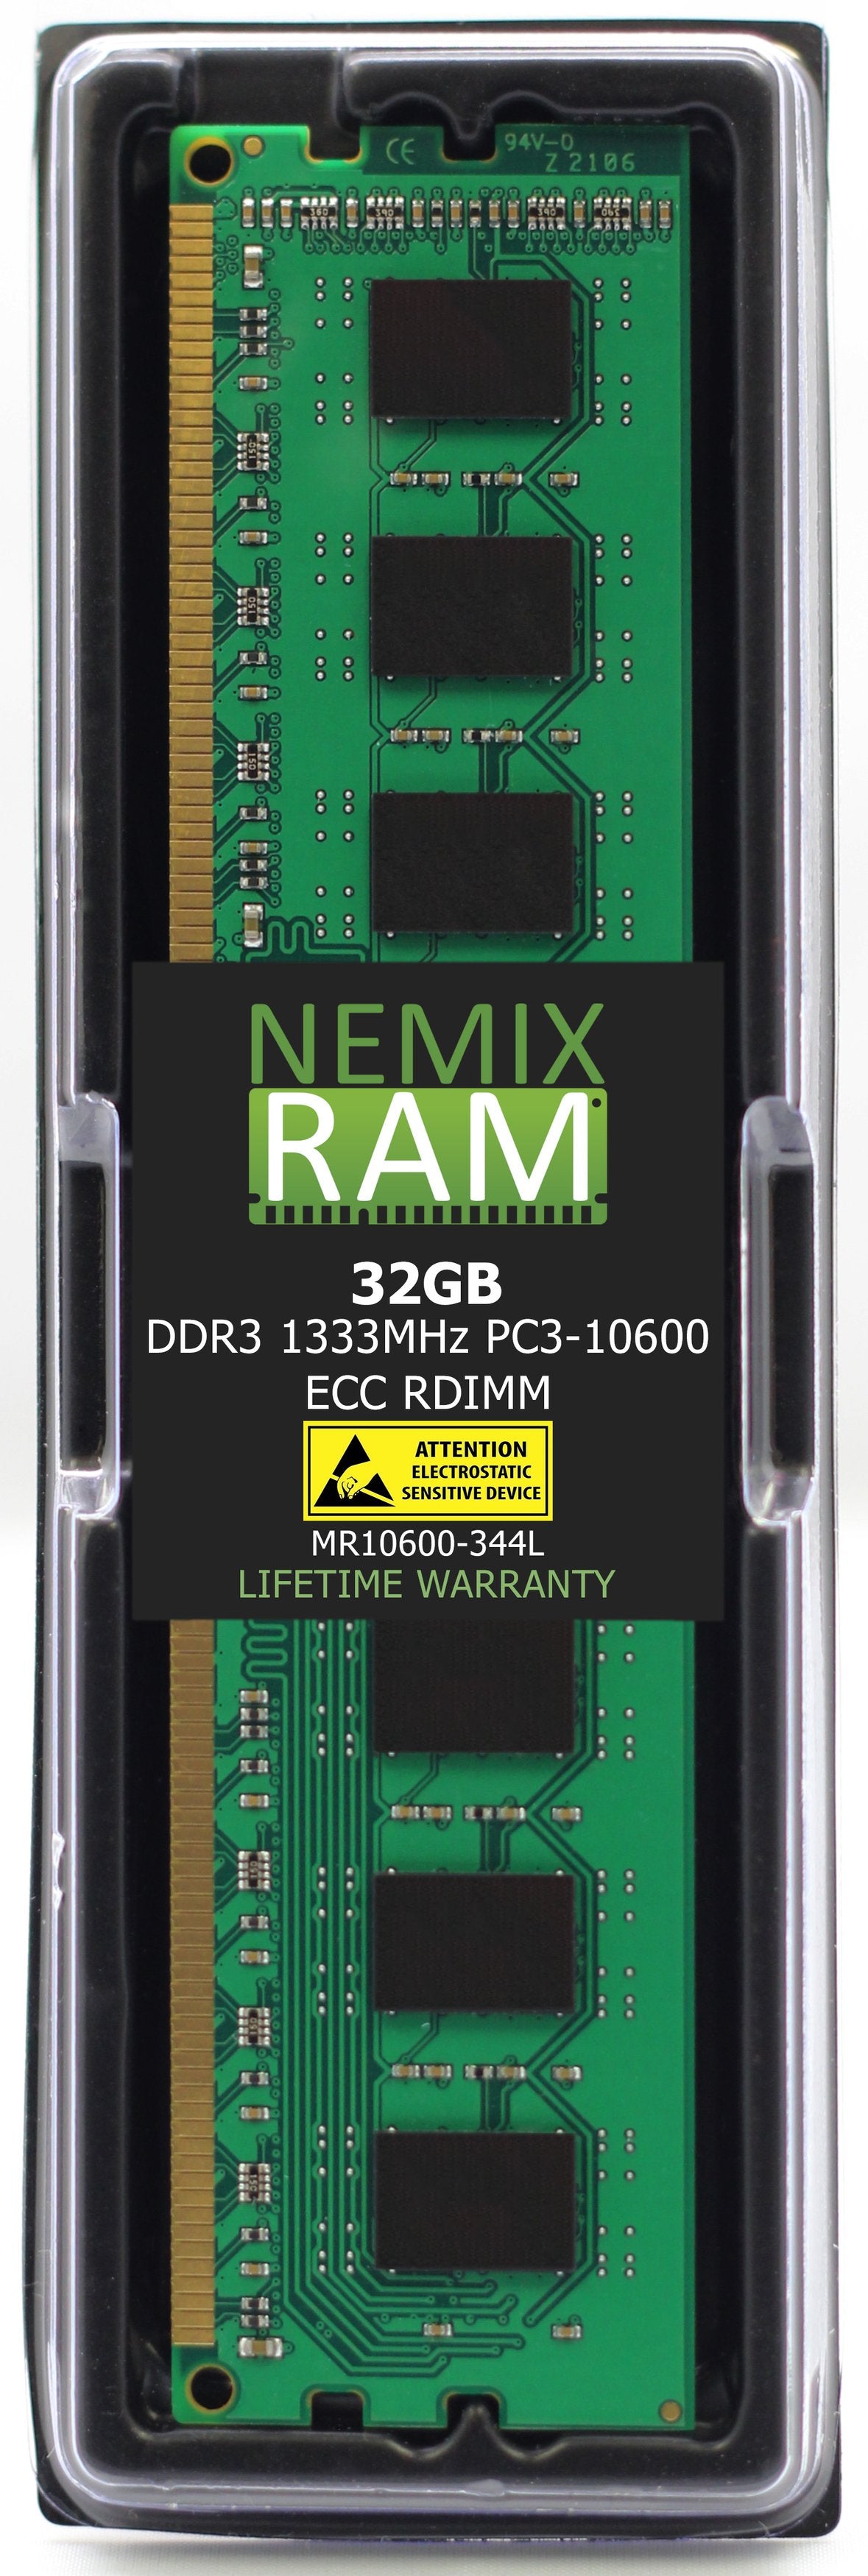 NEC Express5800 B120e Memory Module N8402-152F 32GB DDR3 1333MHZ PC3-10600 RDIMM